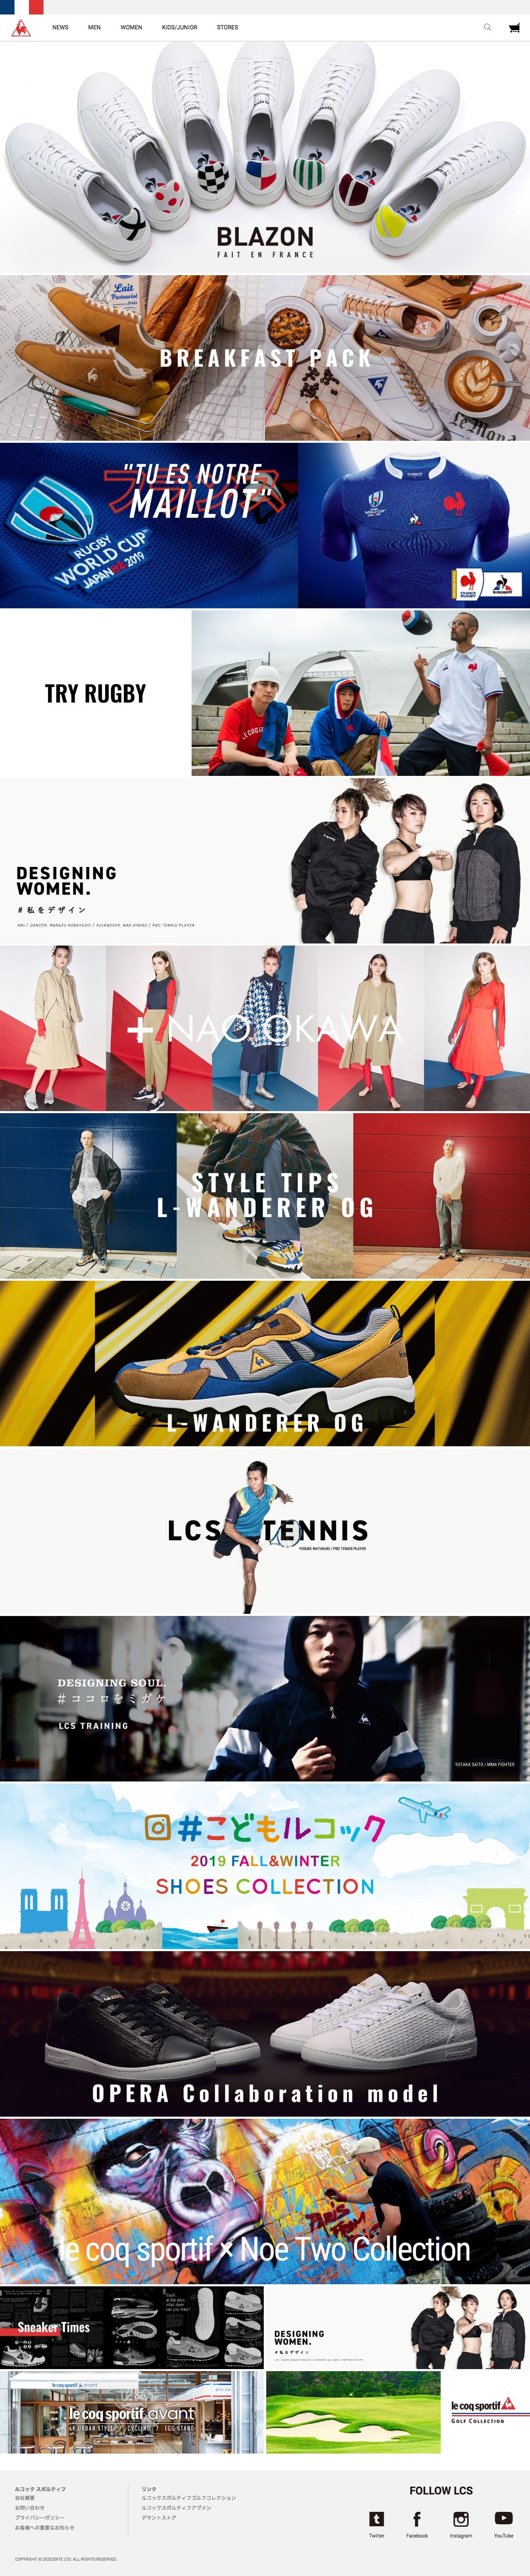 le coq sportif [ルコックスポルティフ]オフィシャルサイトのスクリーンショット - トップページ